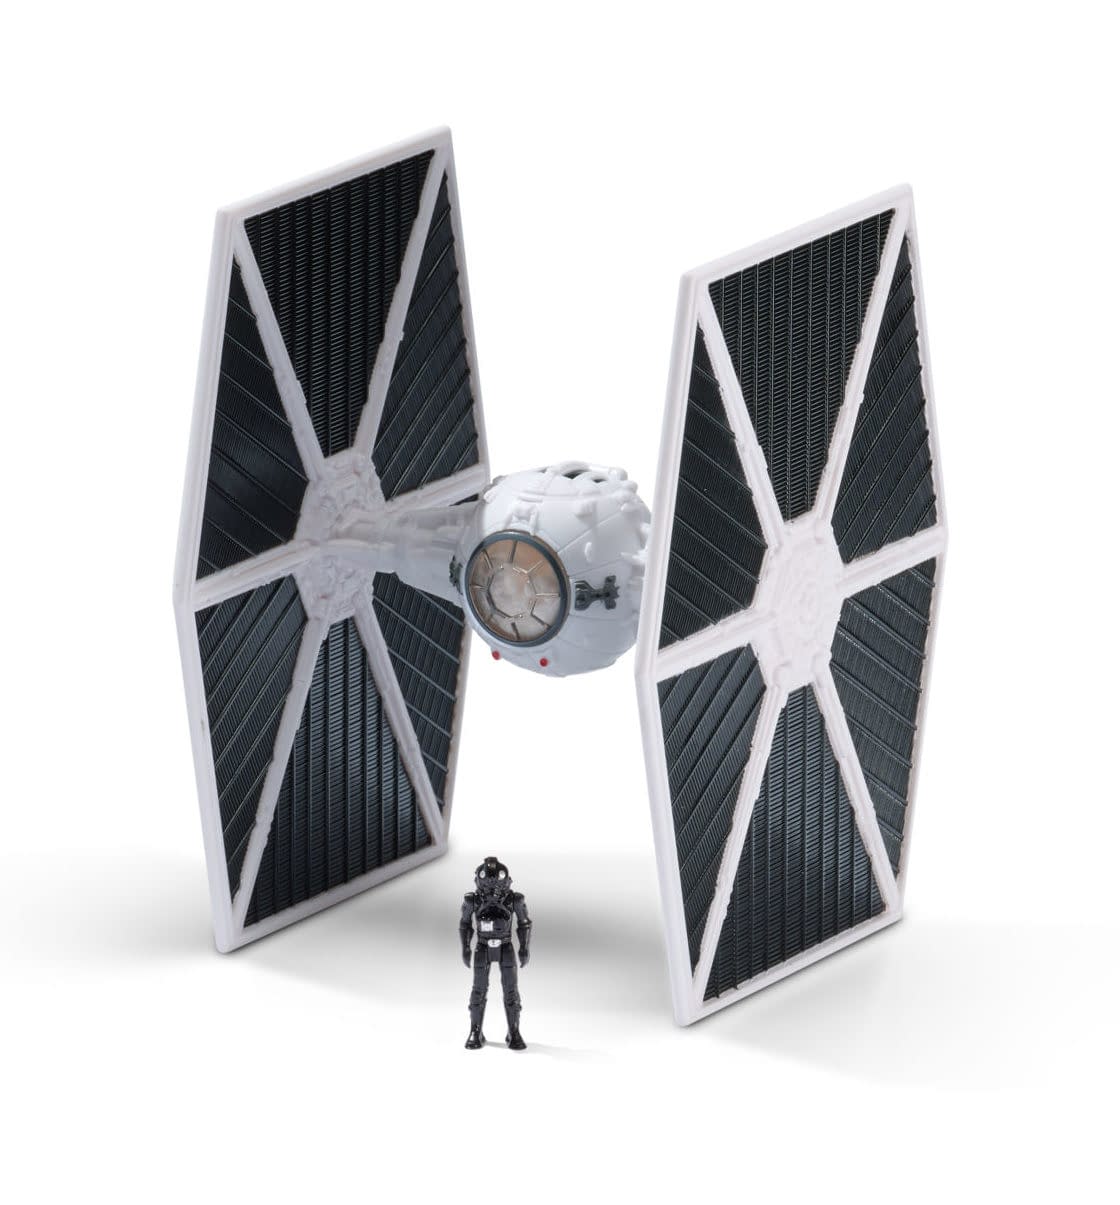 Jazwares Announces Star Wars: Micro Galaxy Squadron Collectible Line